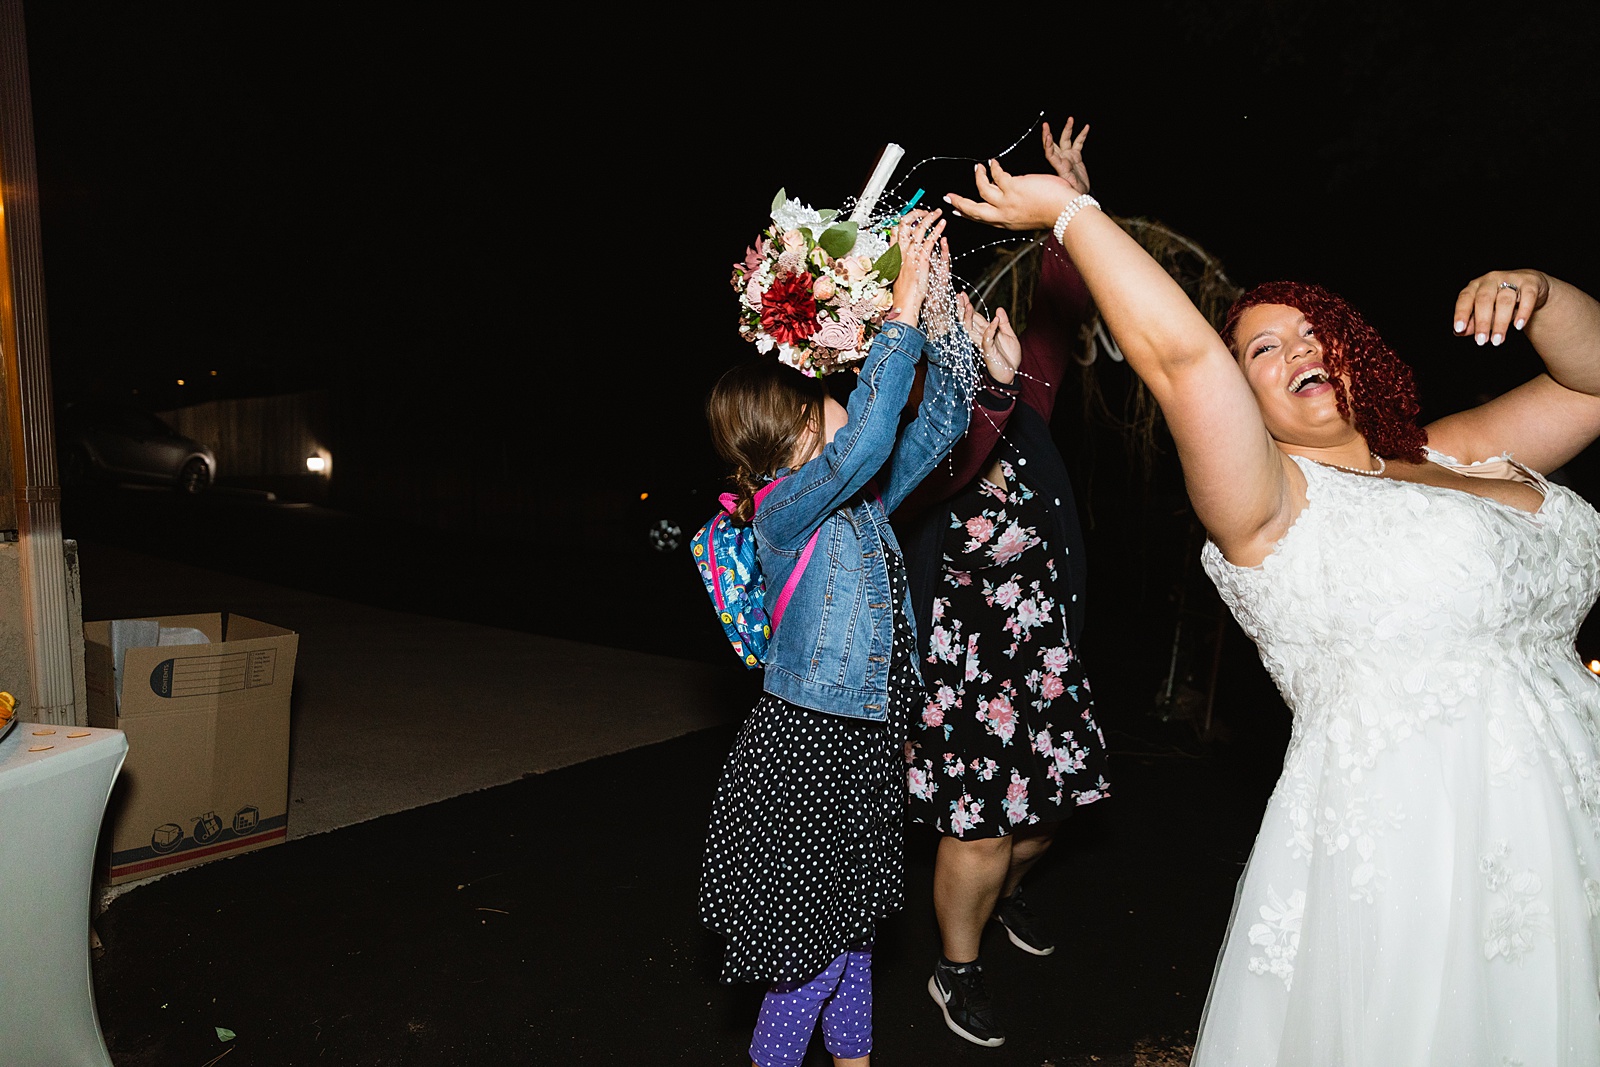 Bouquet toss at Mogollon Rim wedding reception by Northern Arizona wedding photographer PMA Photography.